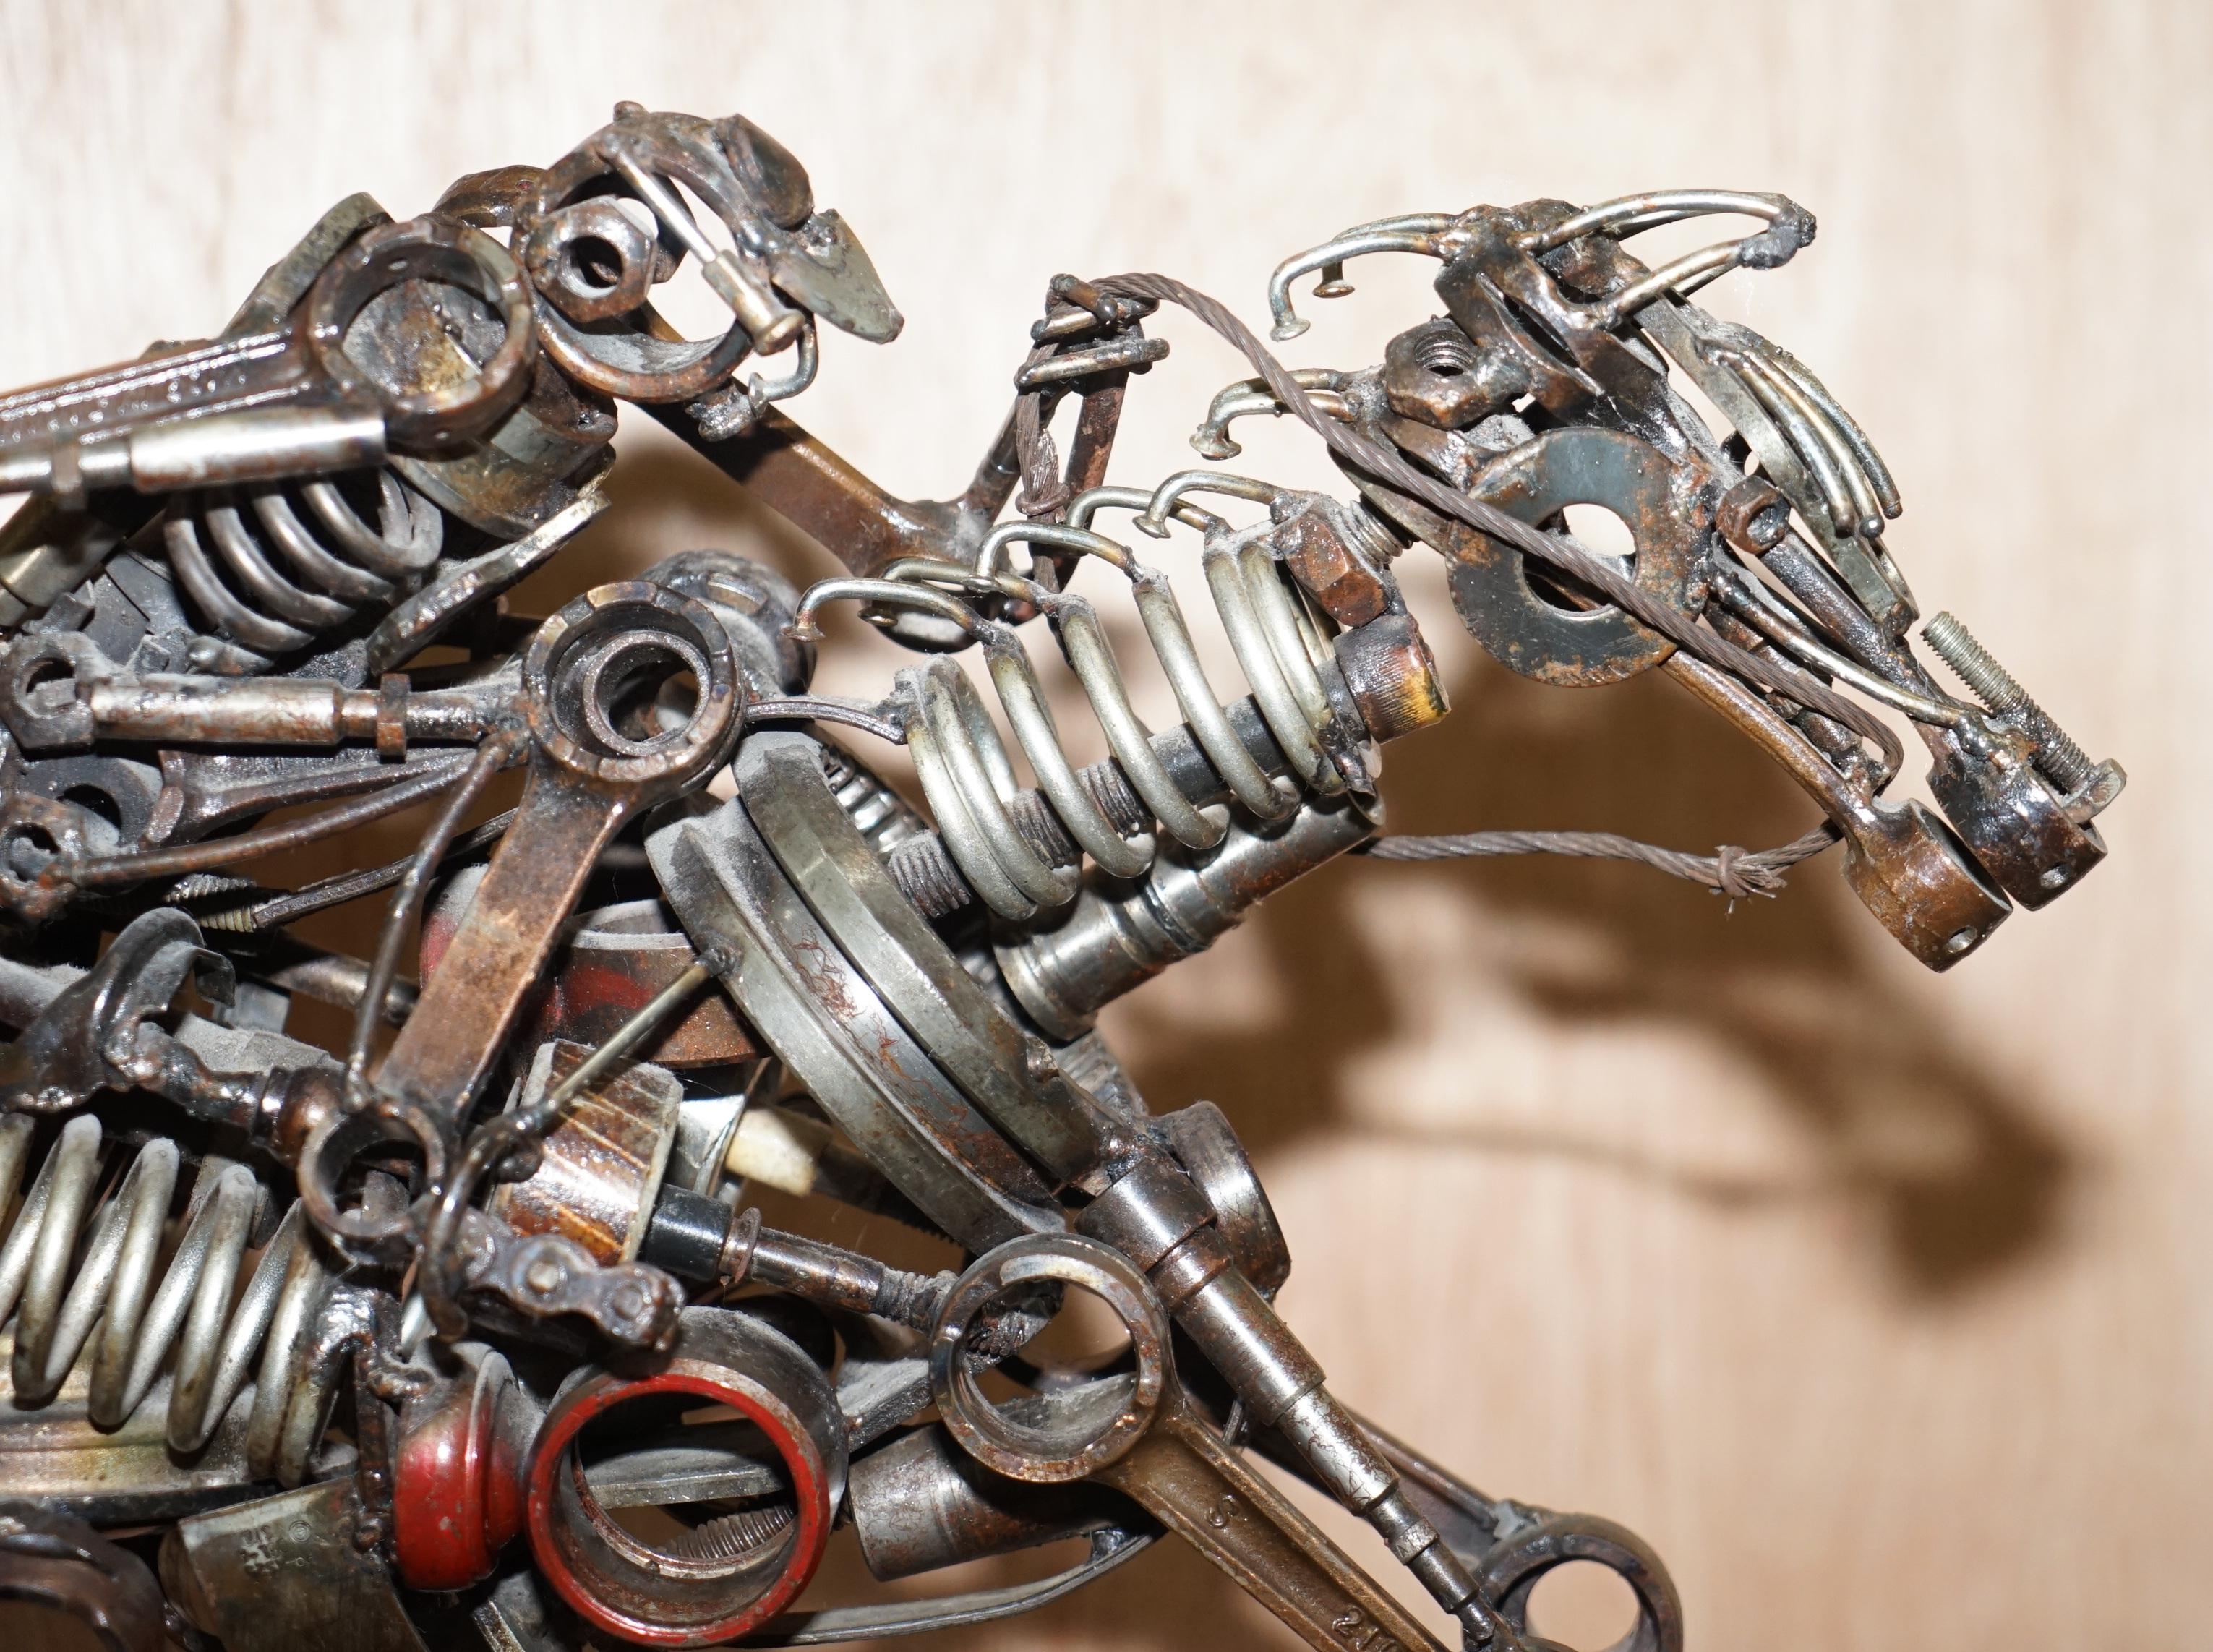 Modern Rare Pair of Motorcycle Parts Scrap Metal Made Sculptures of Solders on Horses